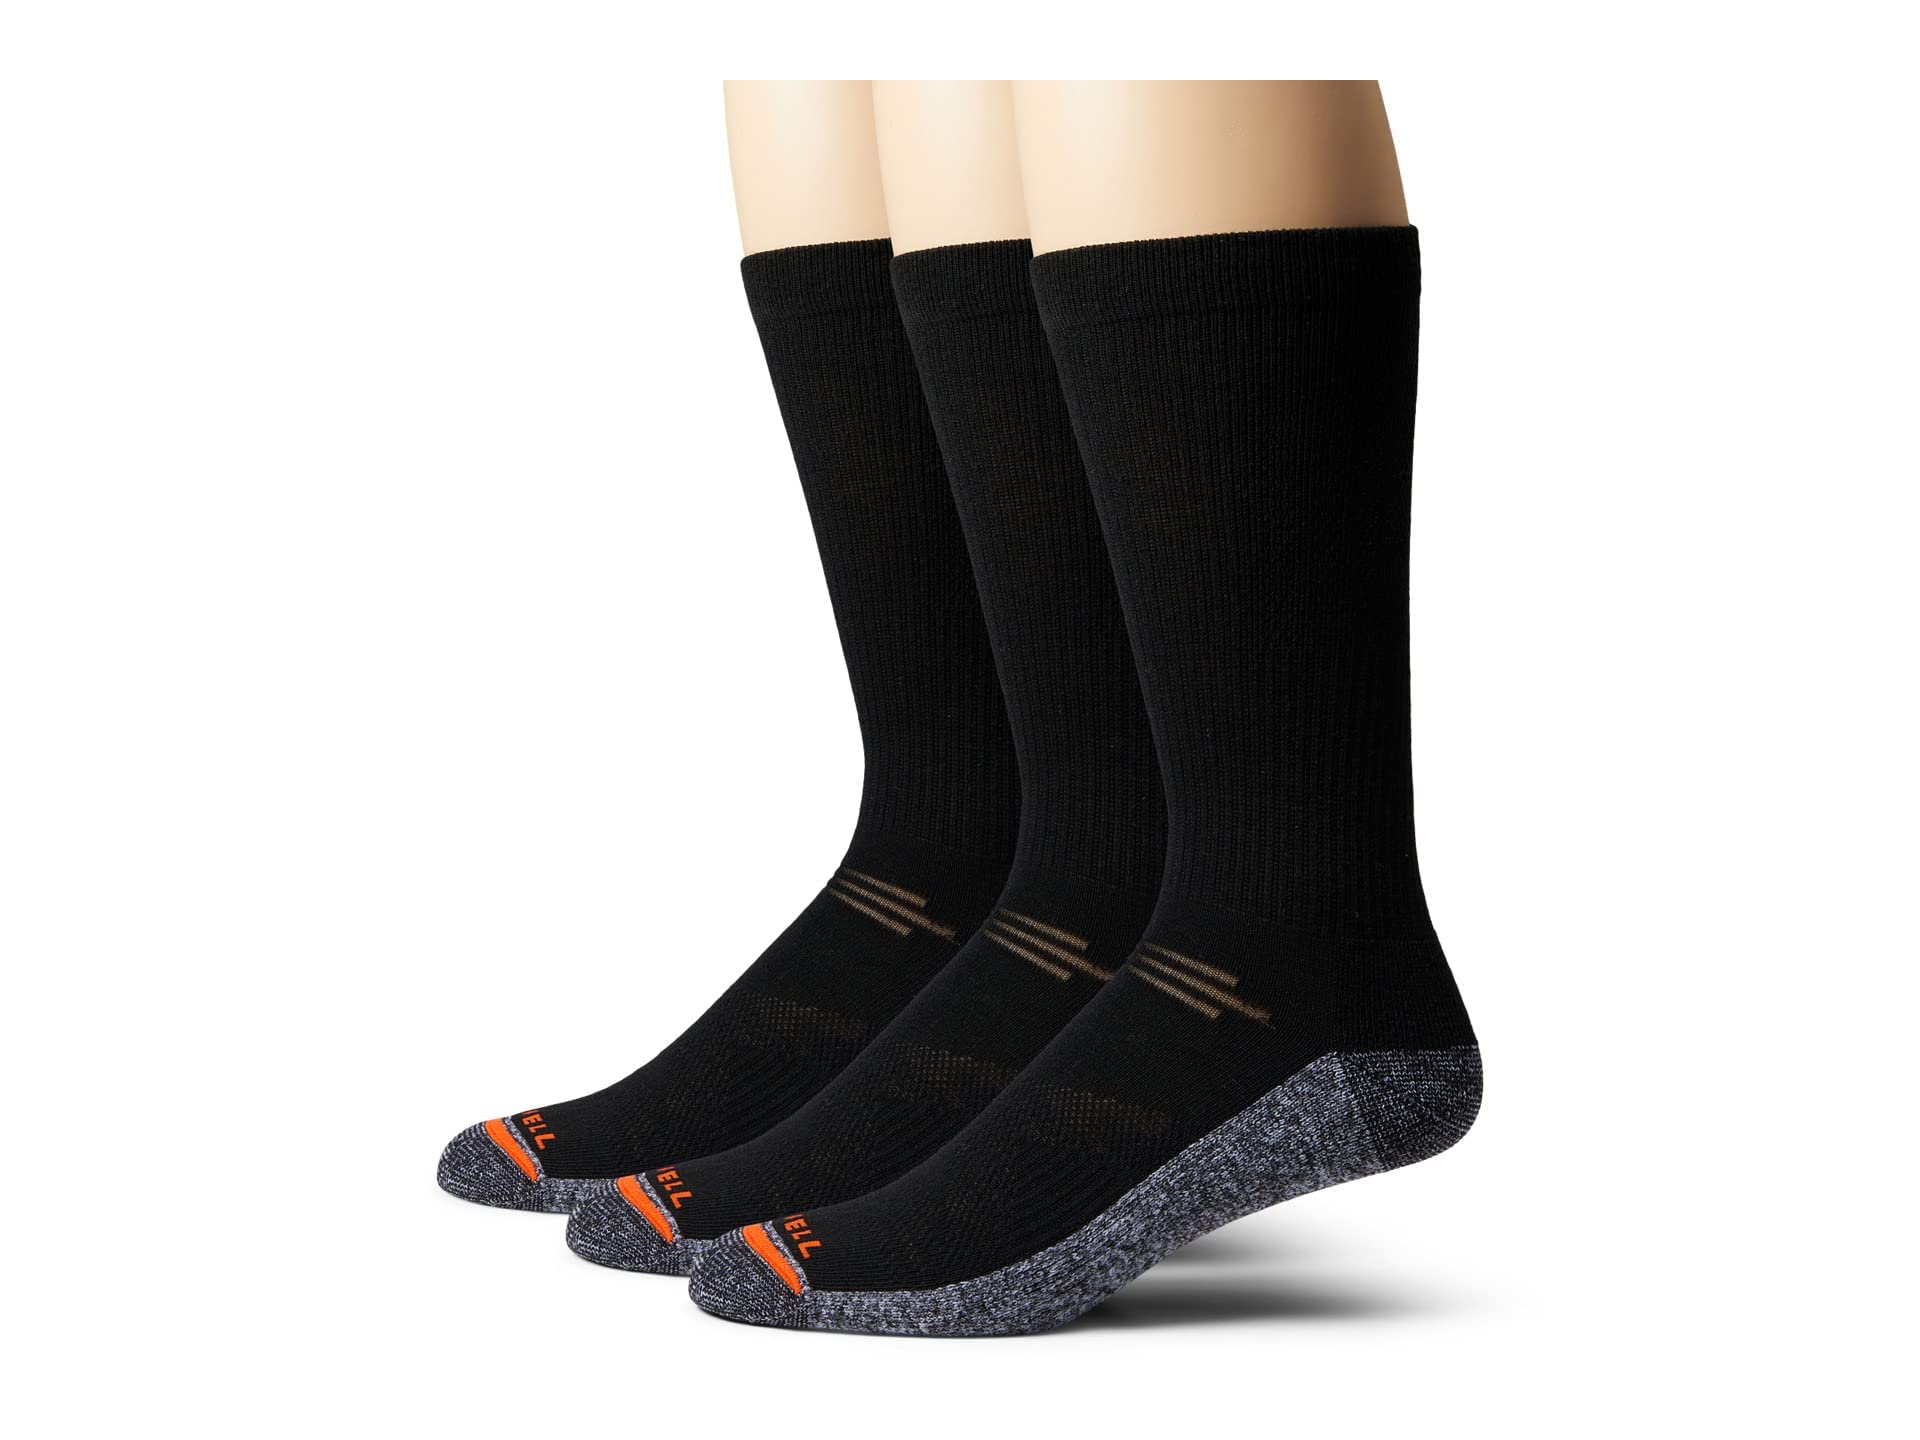 Merrell Men's and Women's Lightweight Work Crew Socks 3 Pair Pack - ComfortBase XS Repreve with Durable Reinforcement